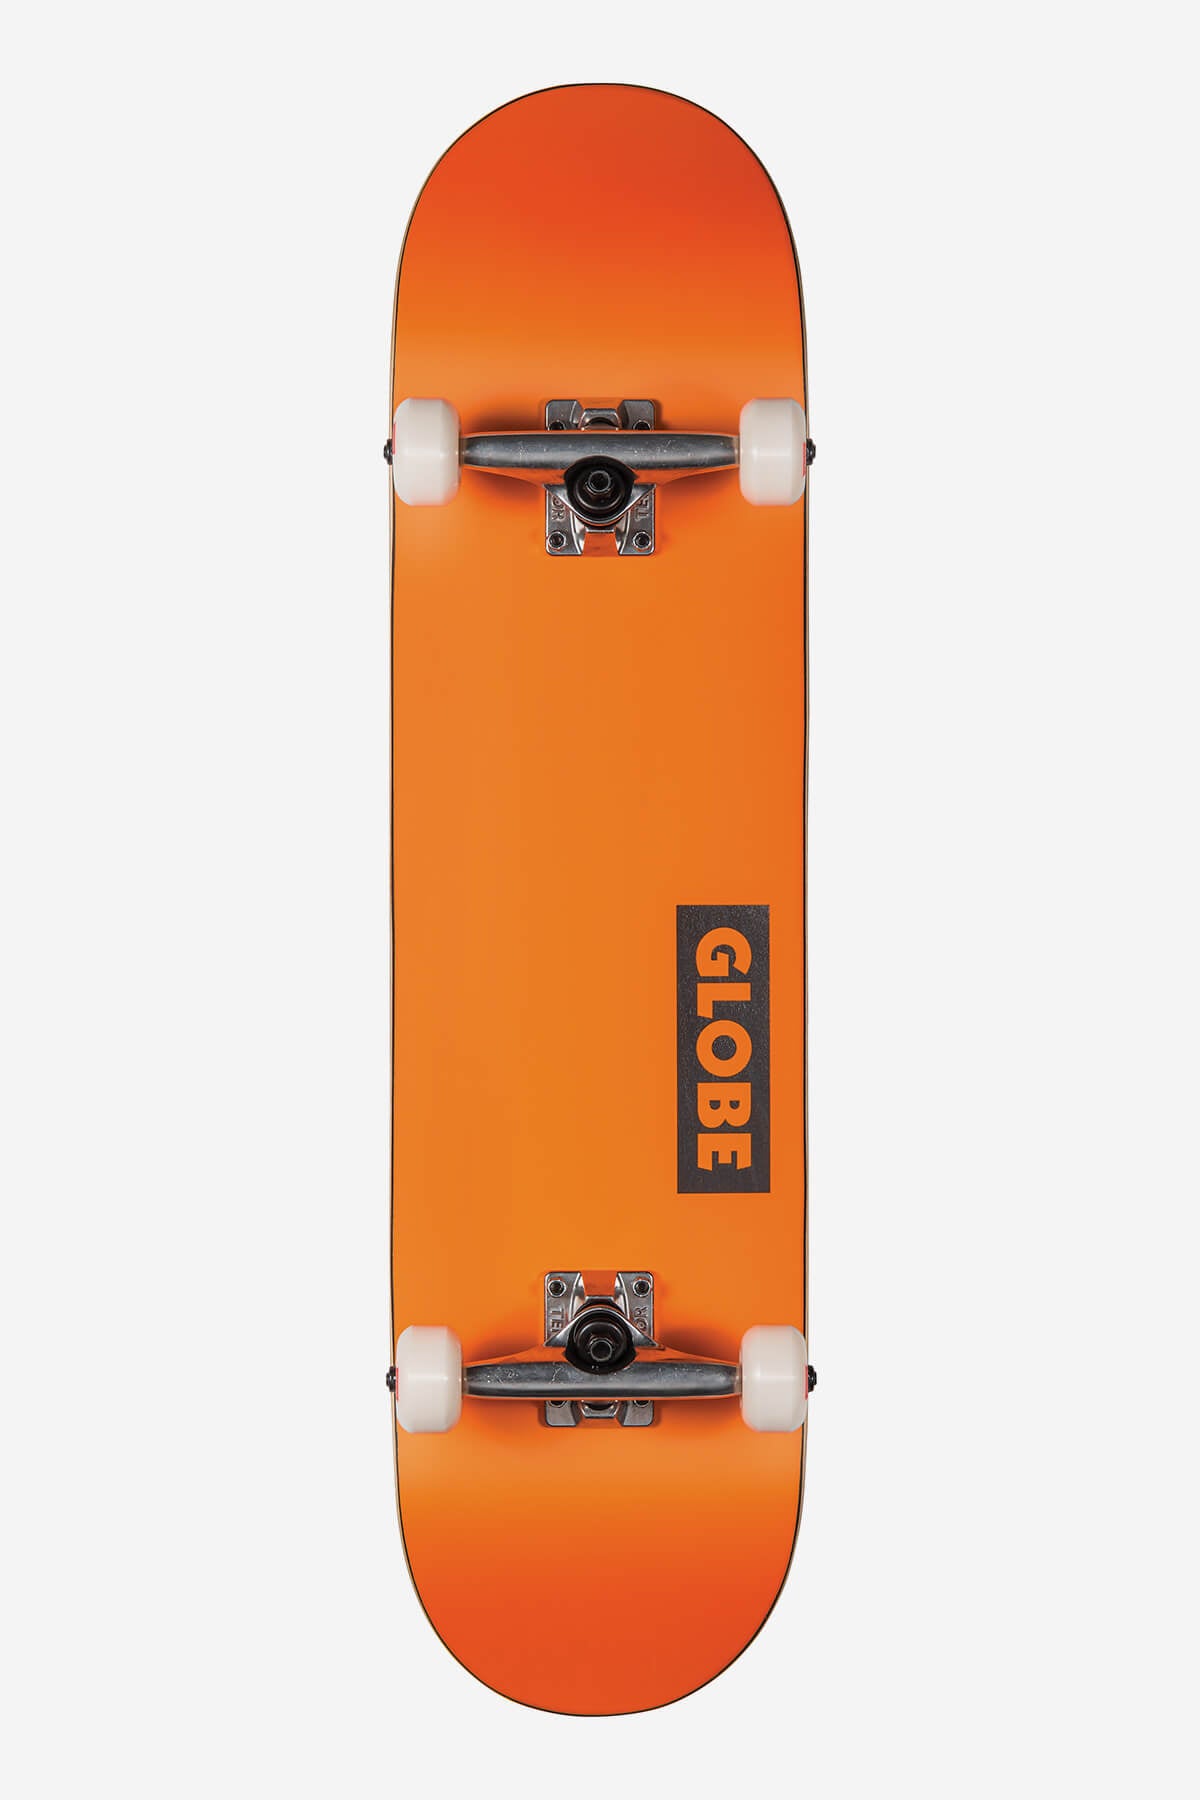 Gutstock neon orange 8.125" komplett skateboard